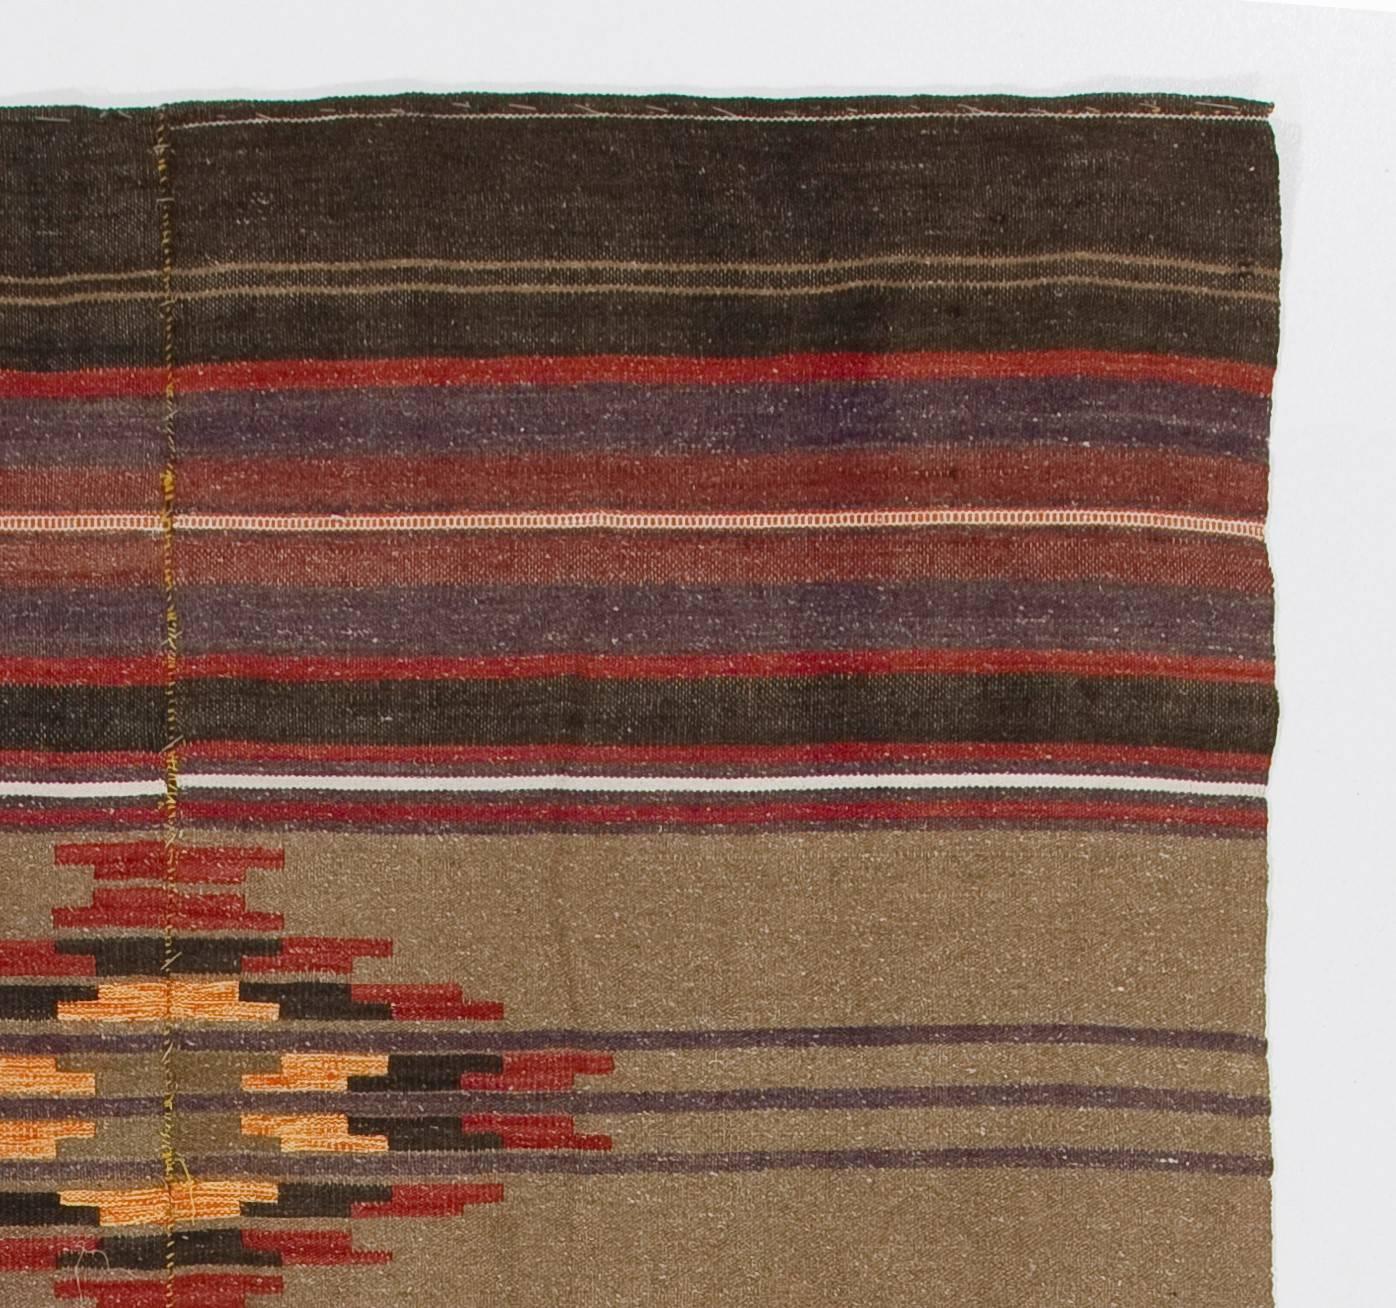 Caucasian Vintage Geometric Anatolian Flat-Weave Kilim Rug. South Western Style. 100% Wool